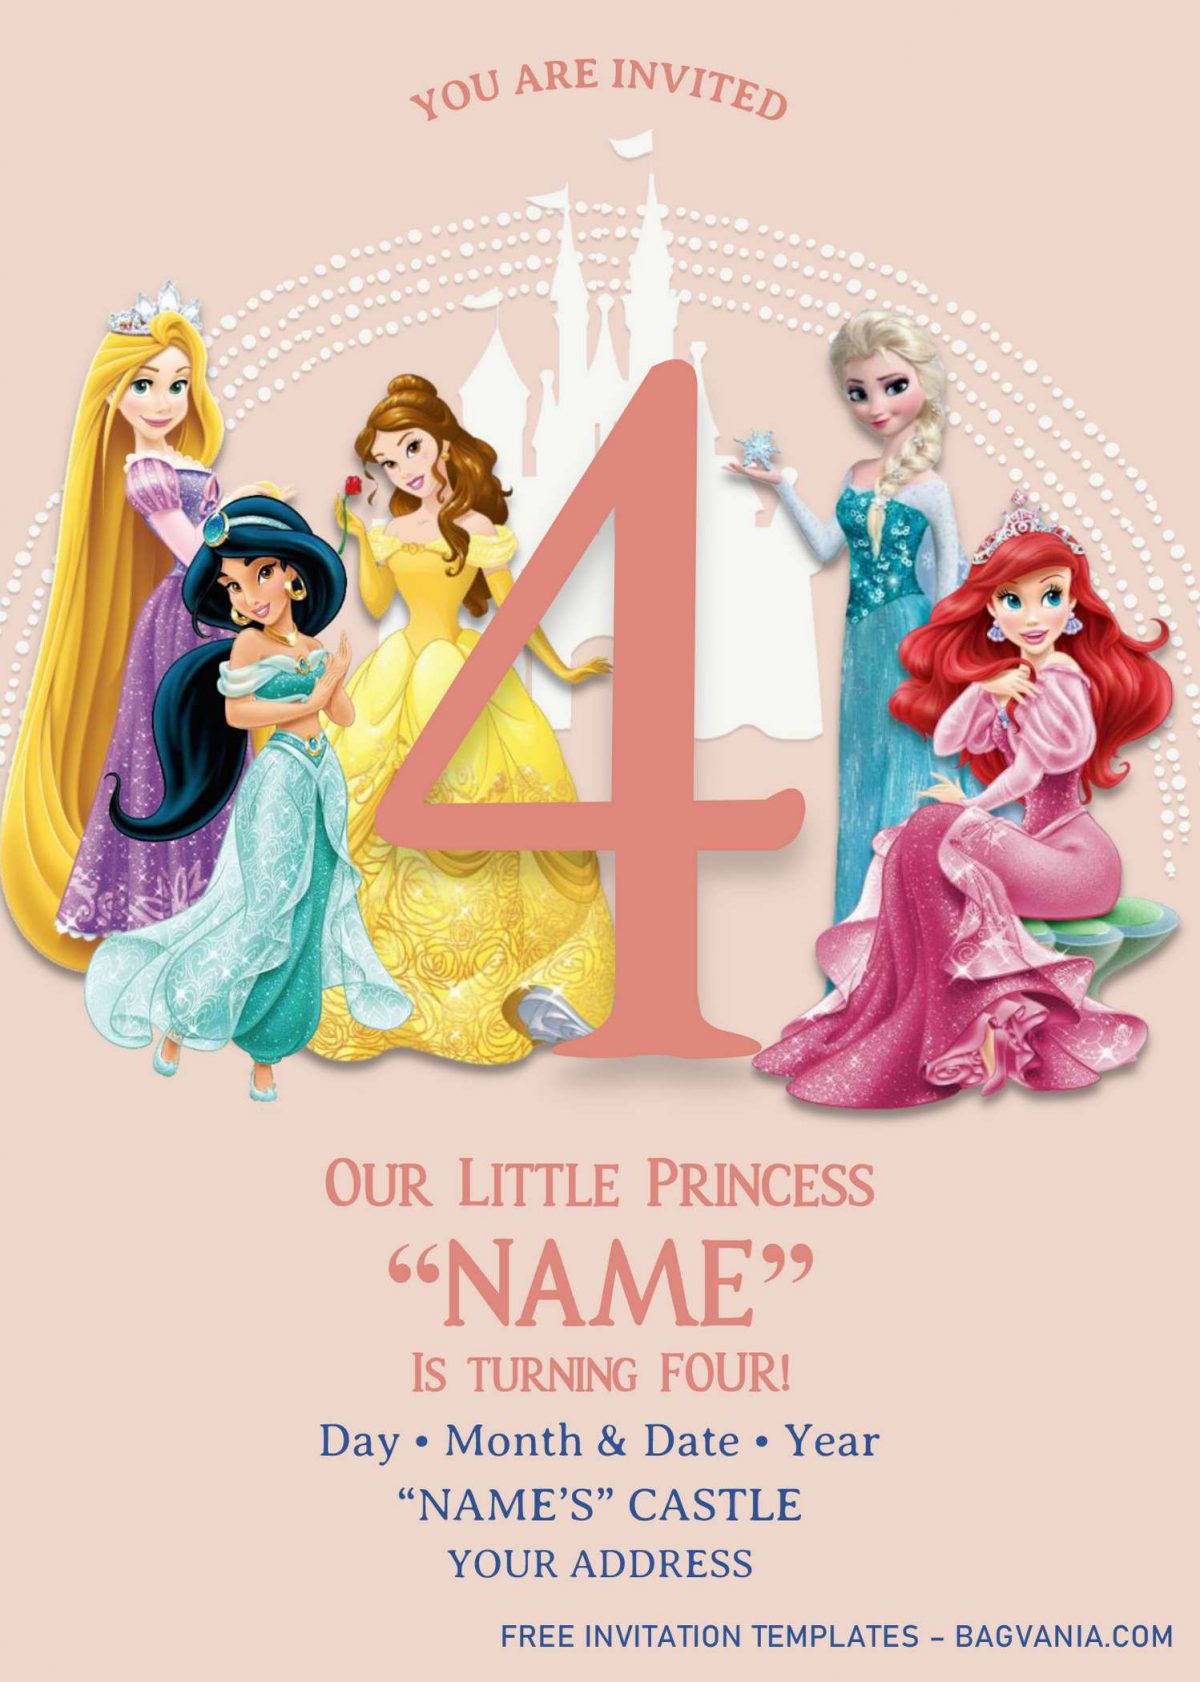 Disney Princess Birthday Invitation Templates - Editable With MS Word and has elsa and jasmine